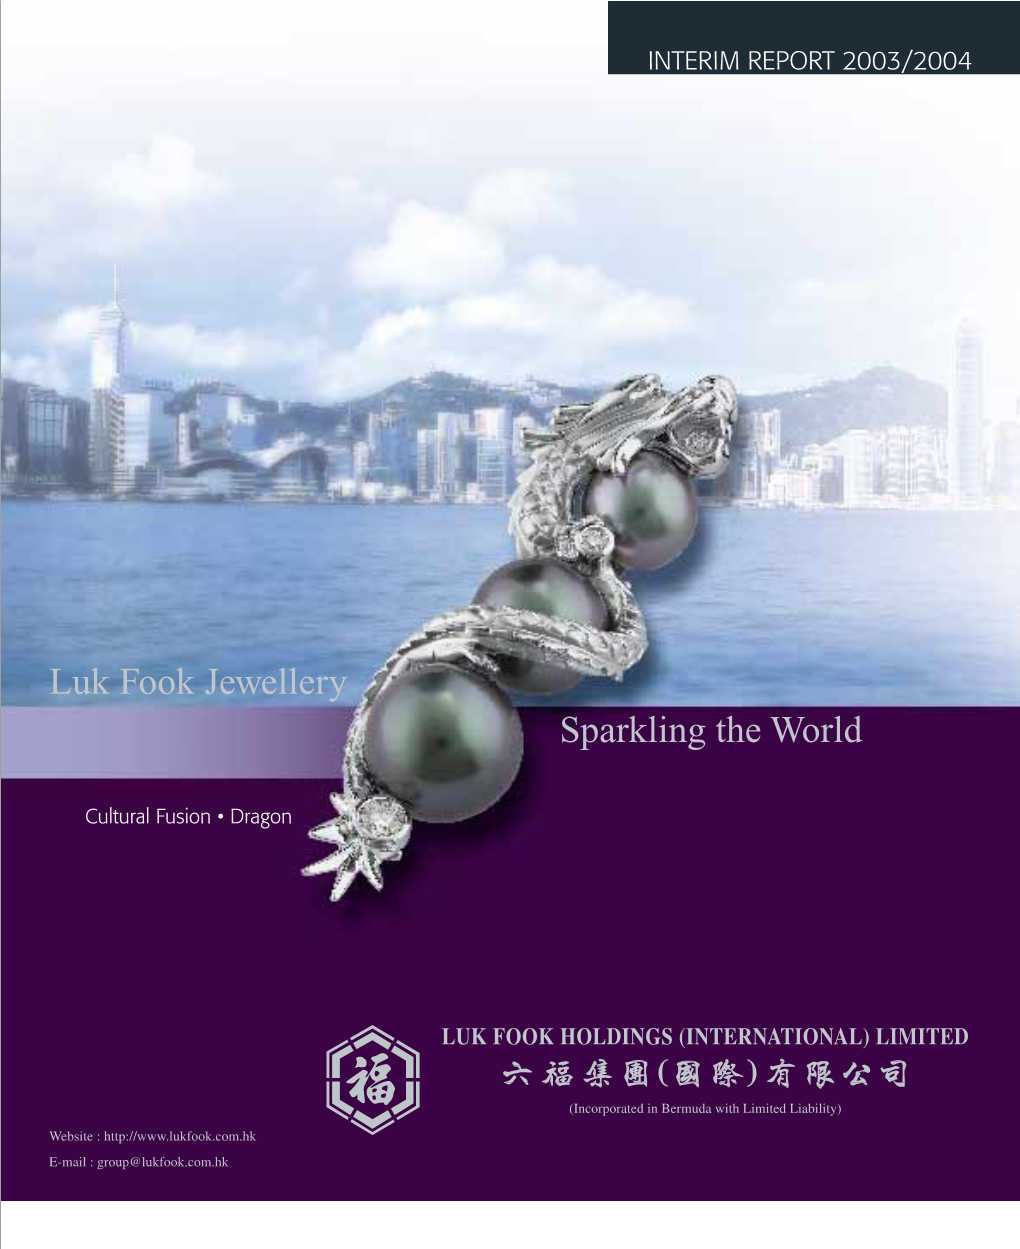 Luk Fook Jewellery Sparkling the World